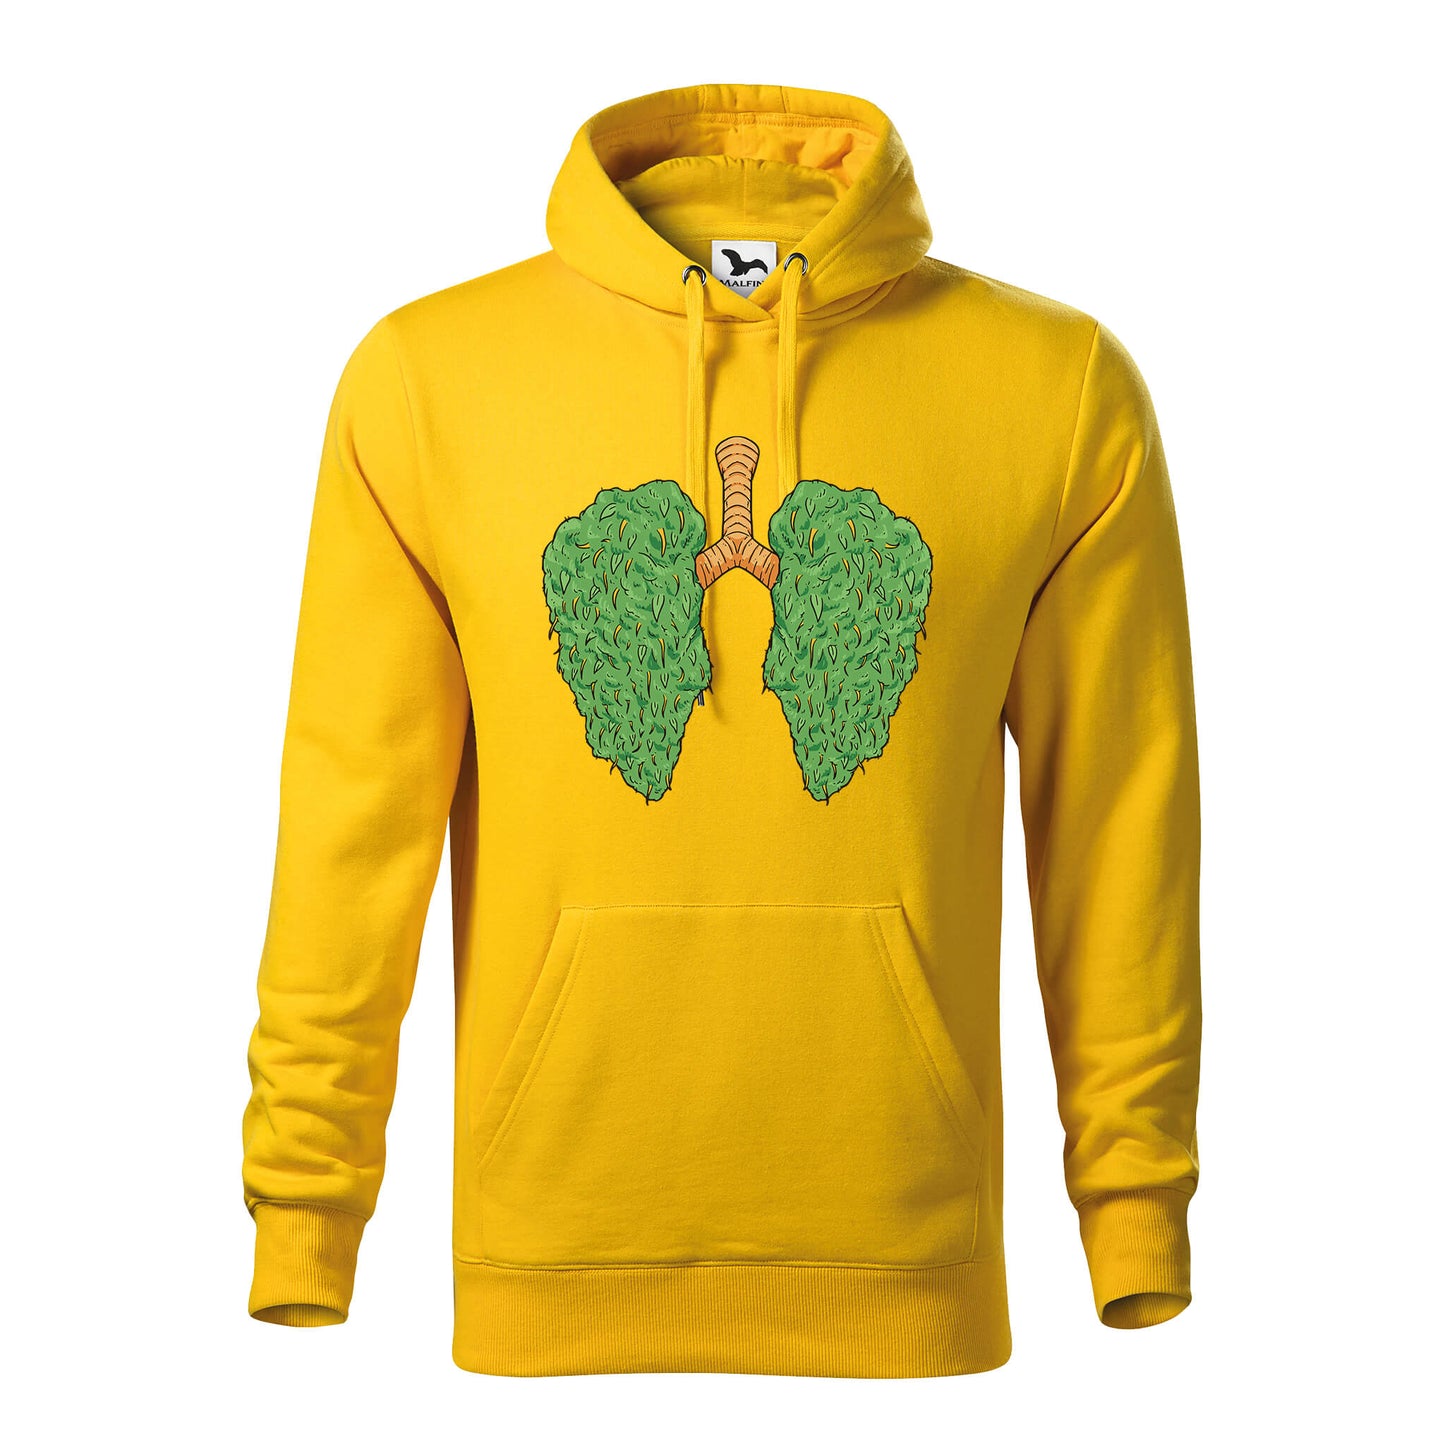 Cannabis lungs hoodie - rvdesignprint